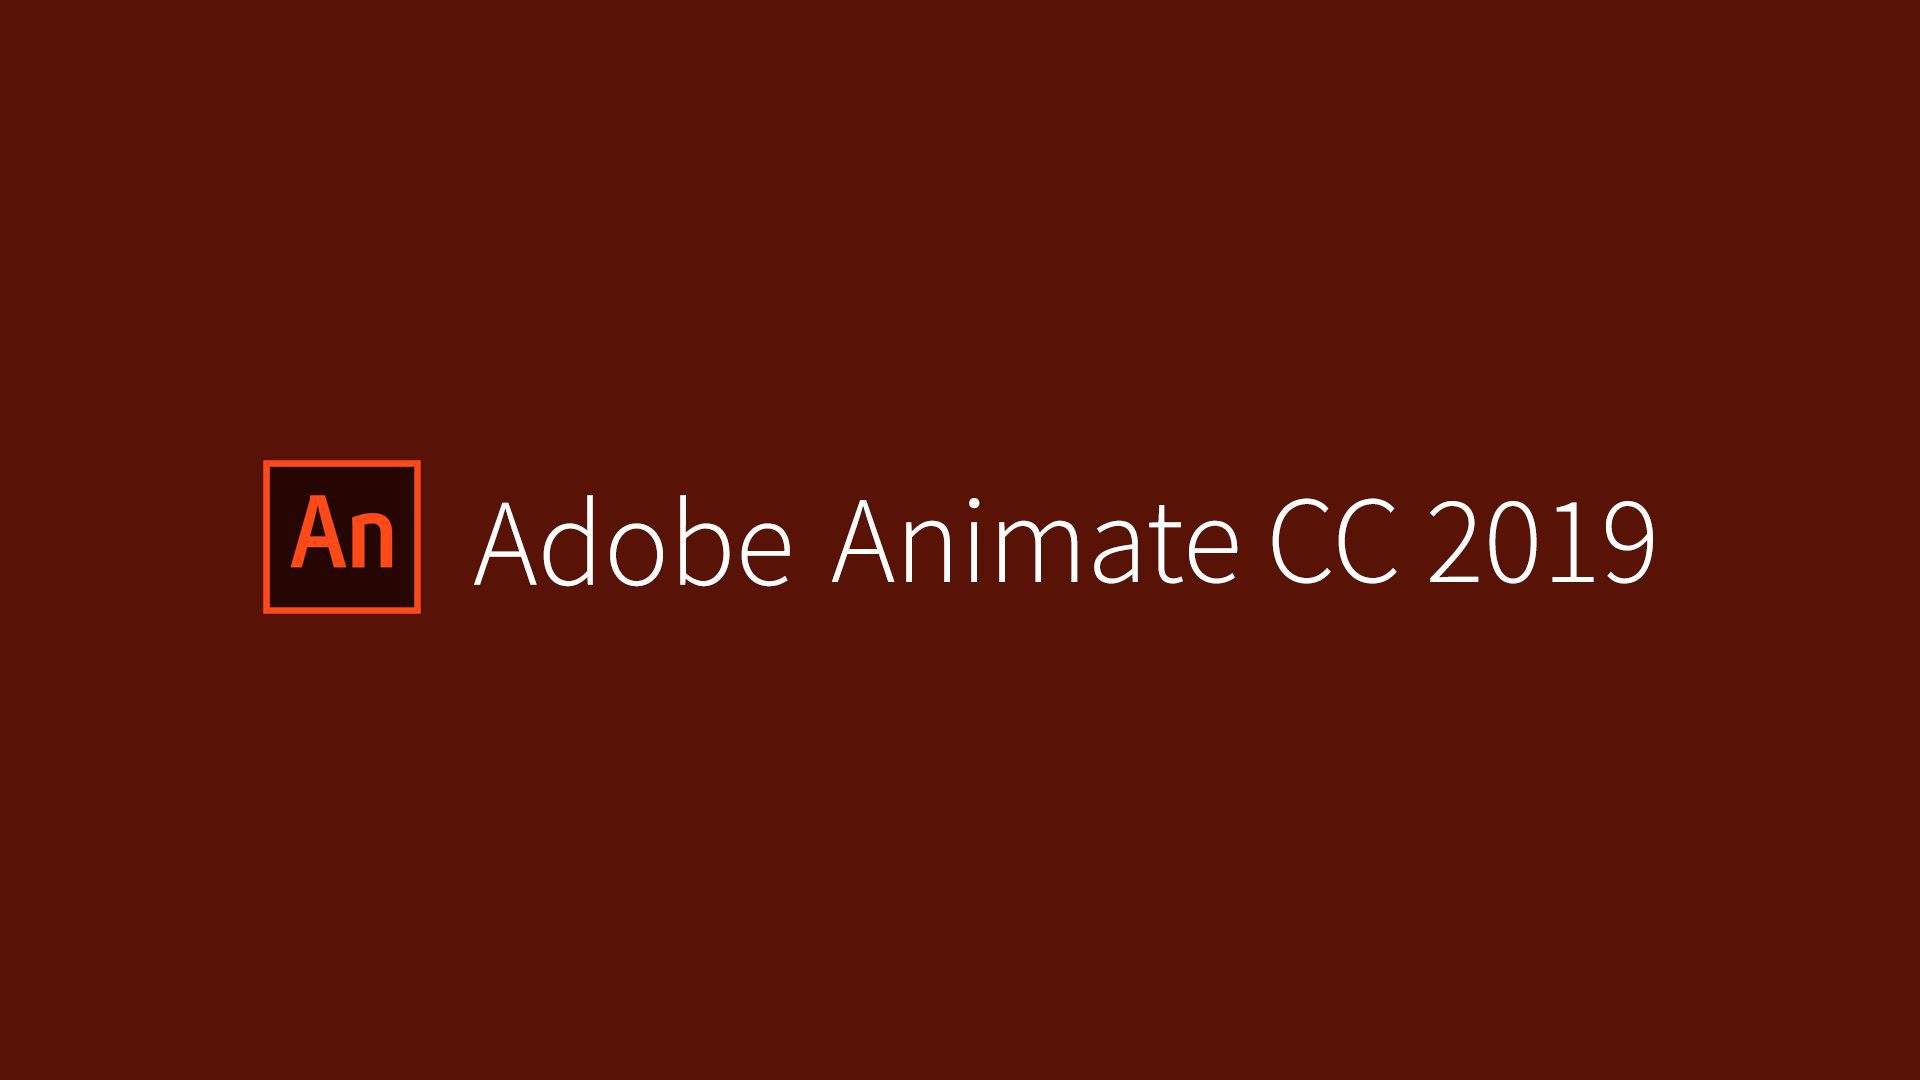 Adobe Animate CC 2019 Free Download